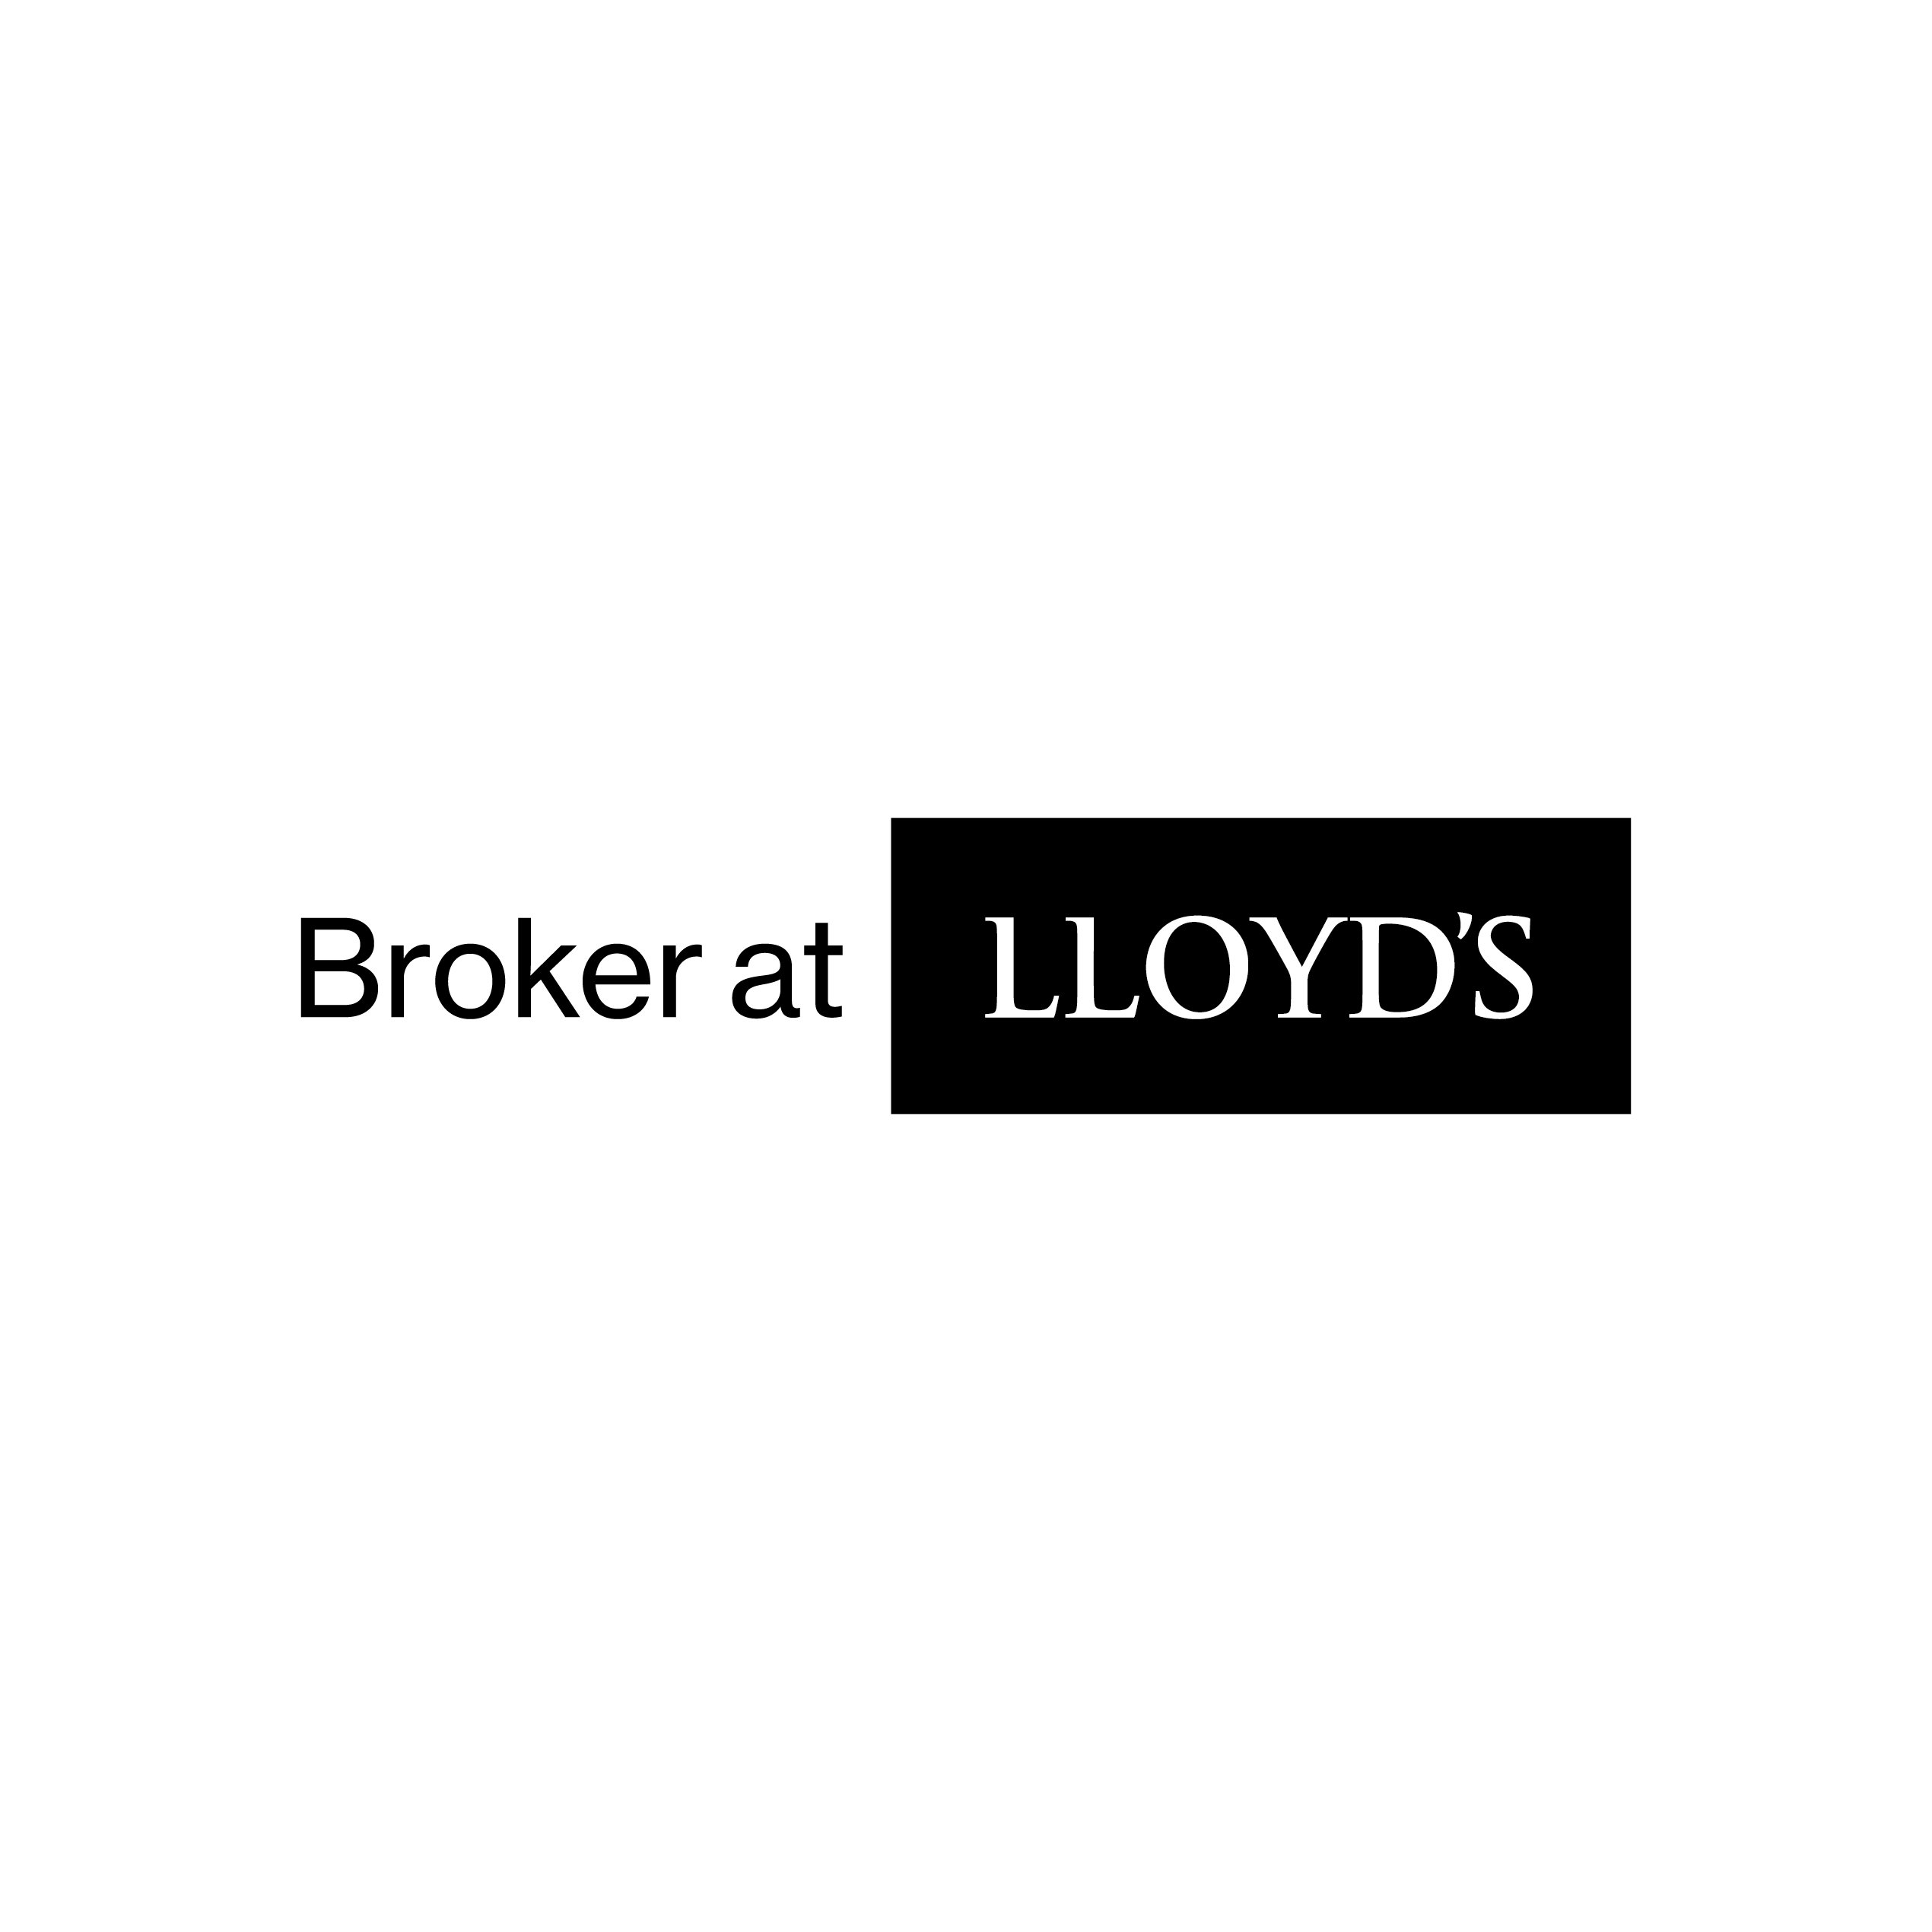 BLW Announces Lloyd’s Broker Status